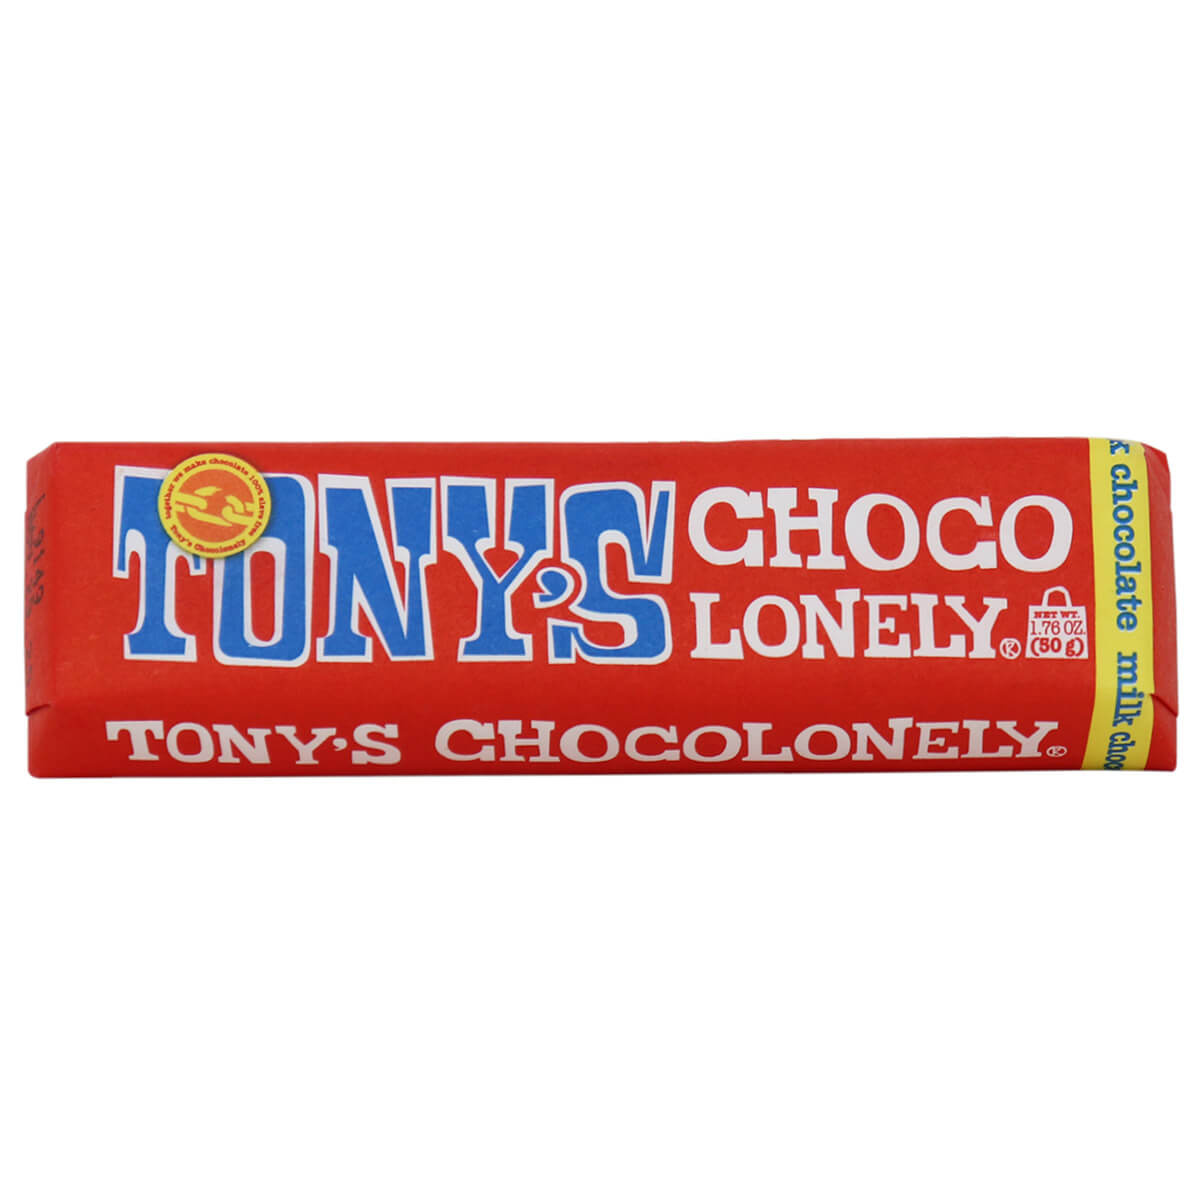 Rif_439 Tony’s Chocolonely – Milk chocolate 50g